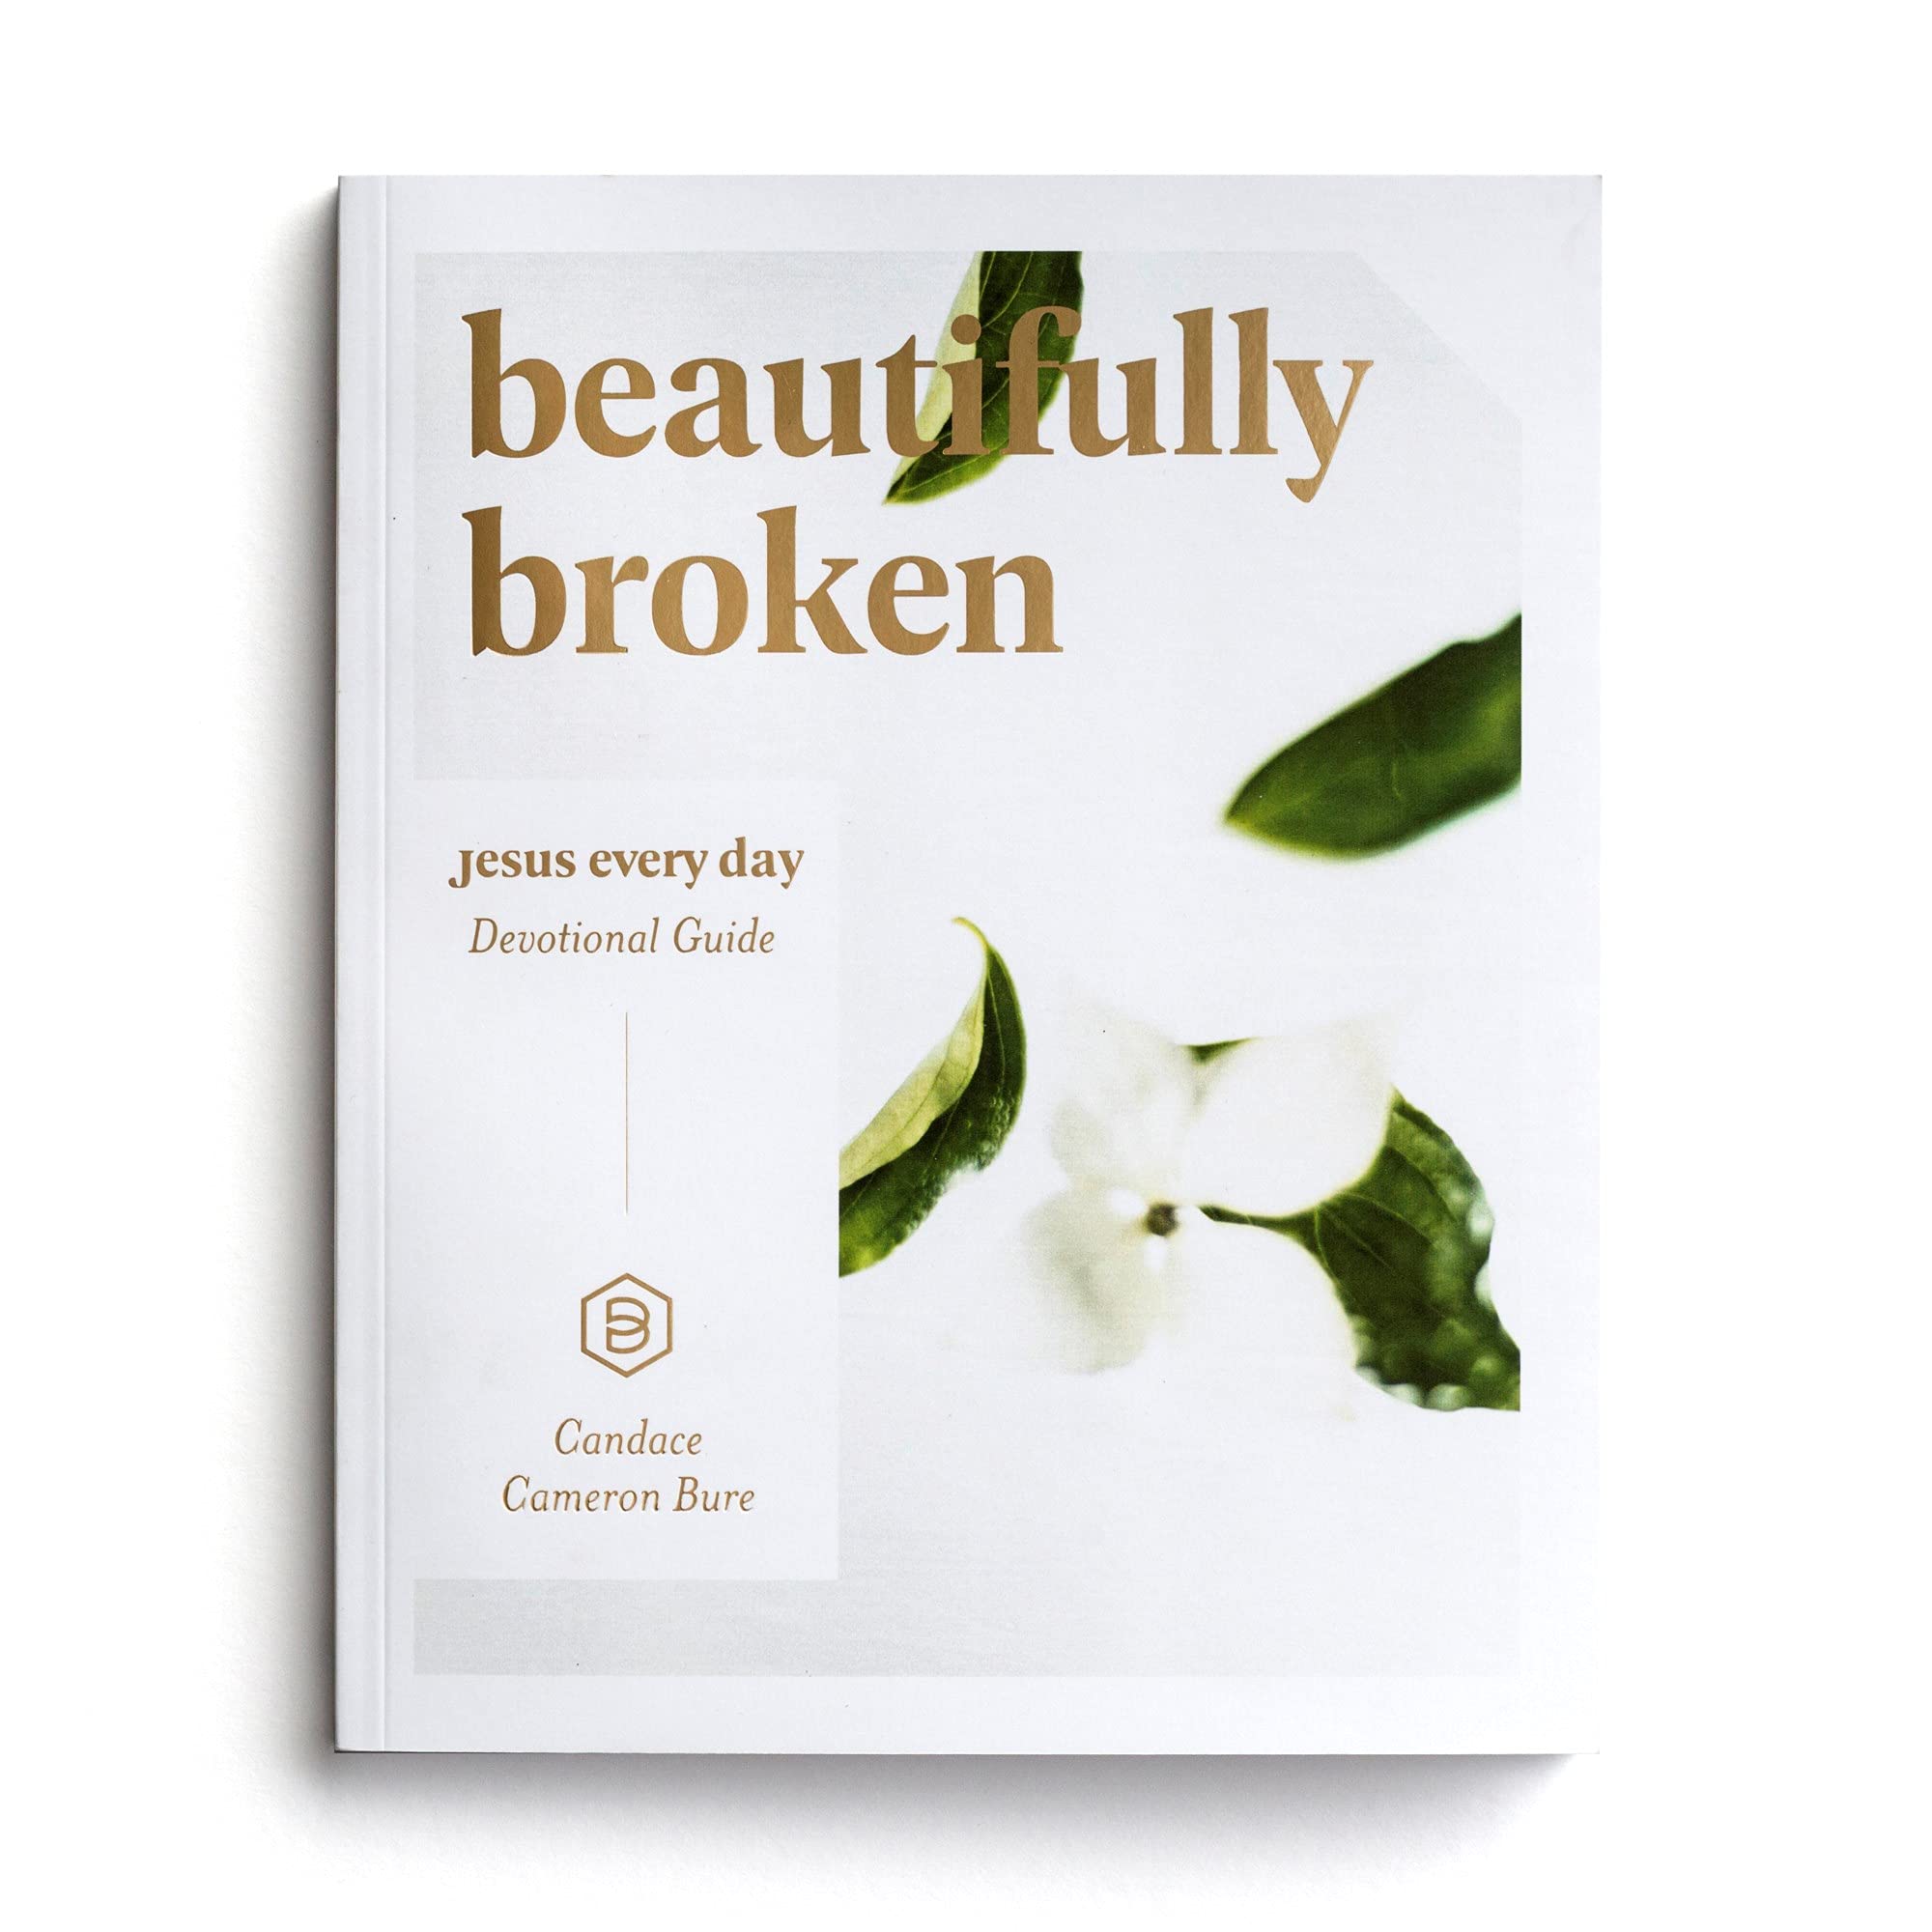 Beautifully Broken: Jesus Every Day Devotional Guide